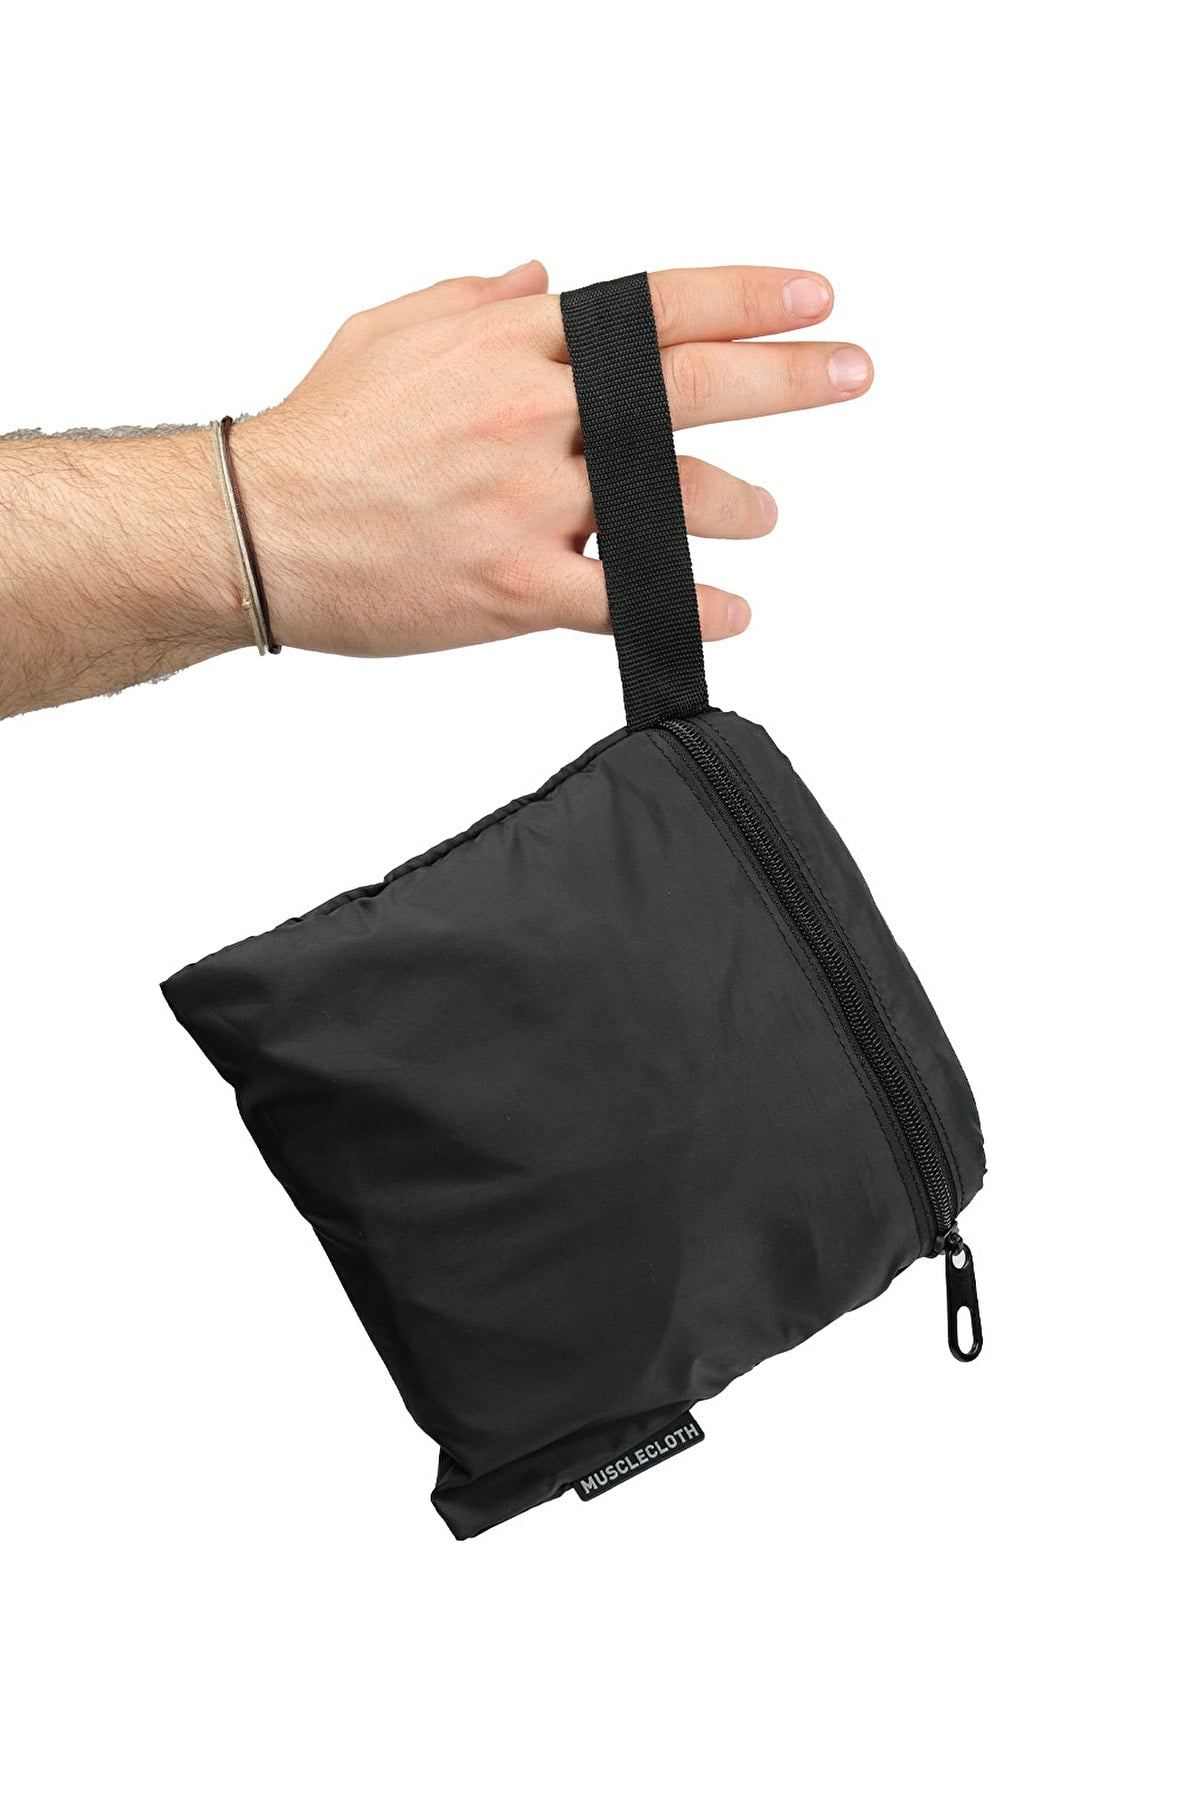 Packable Foldable Backpack Black